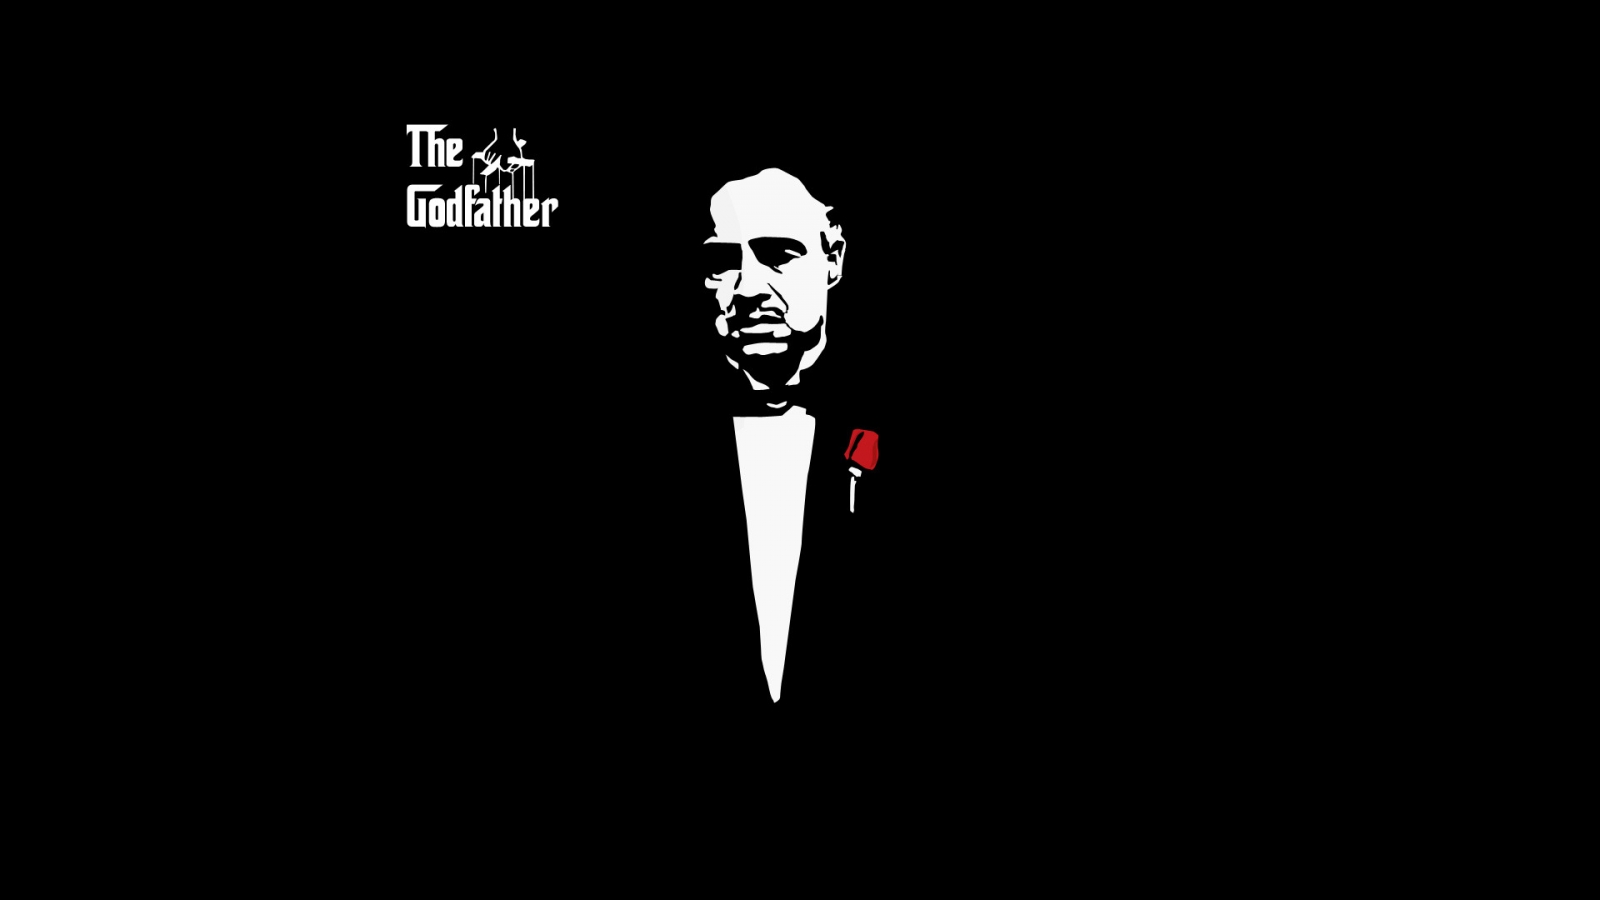 Godfather Fan art for 1600 x 900 HDTV resolution